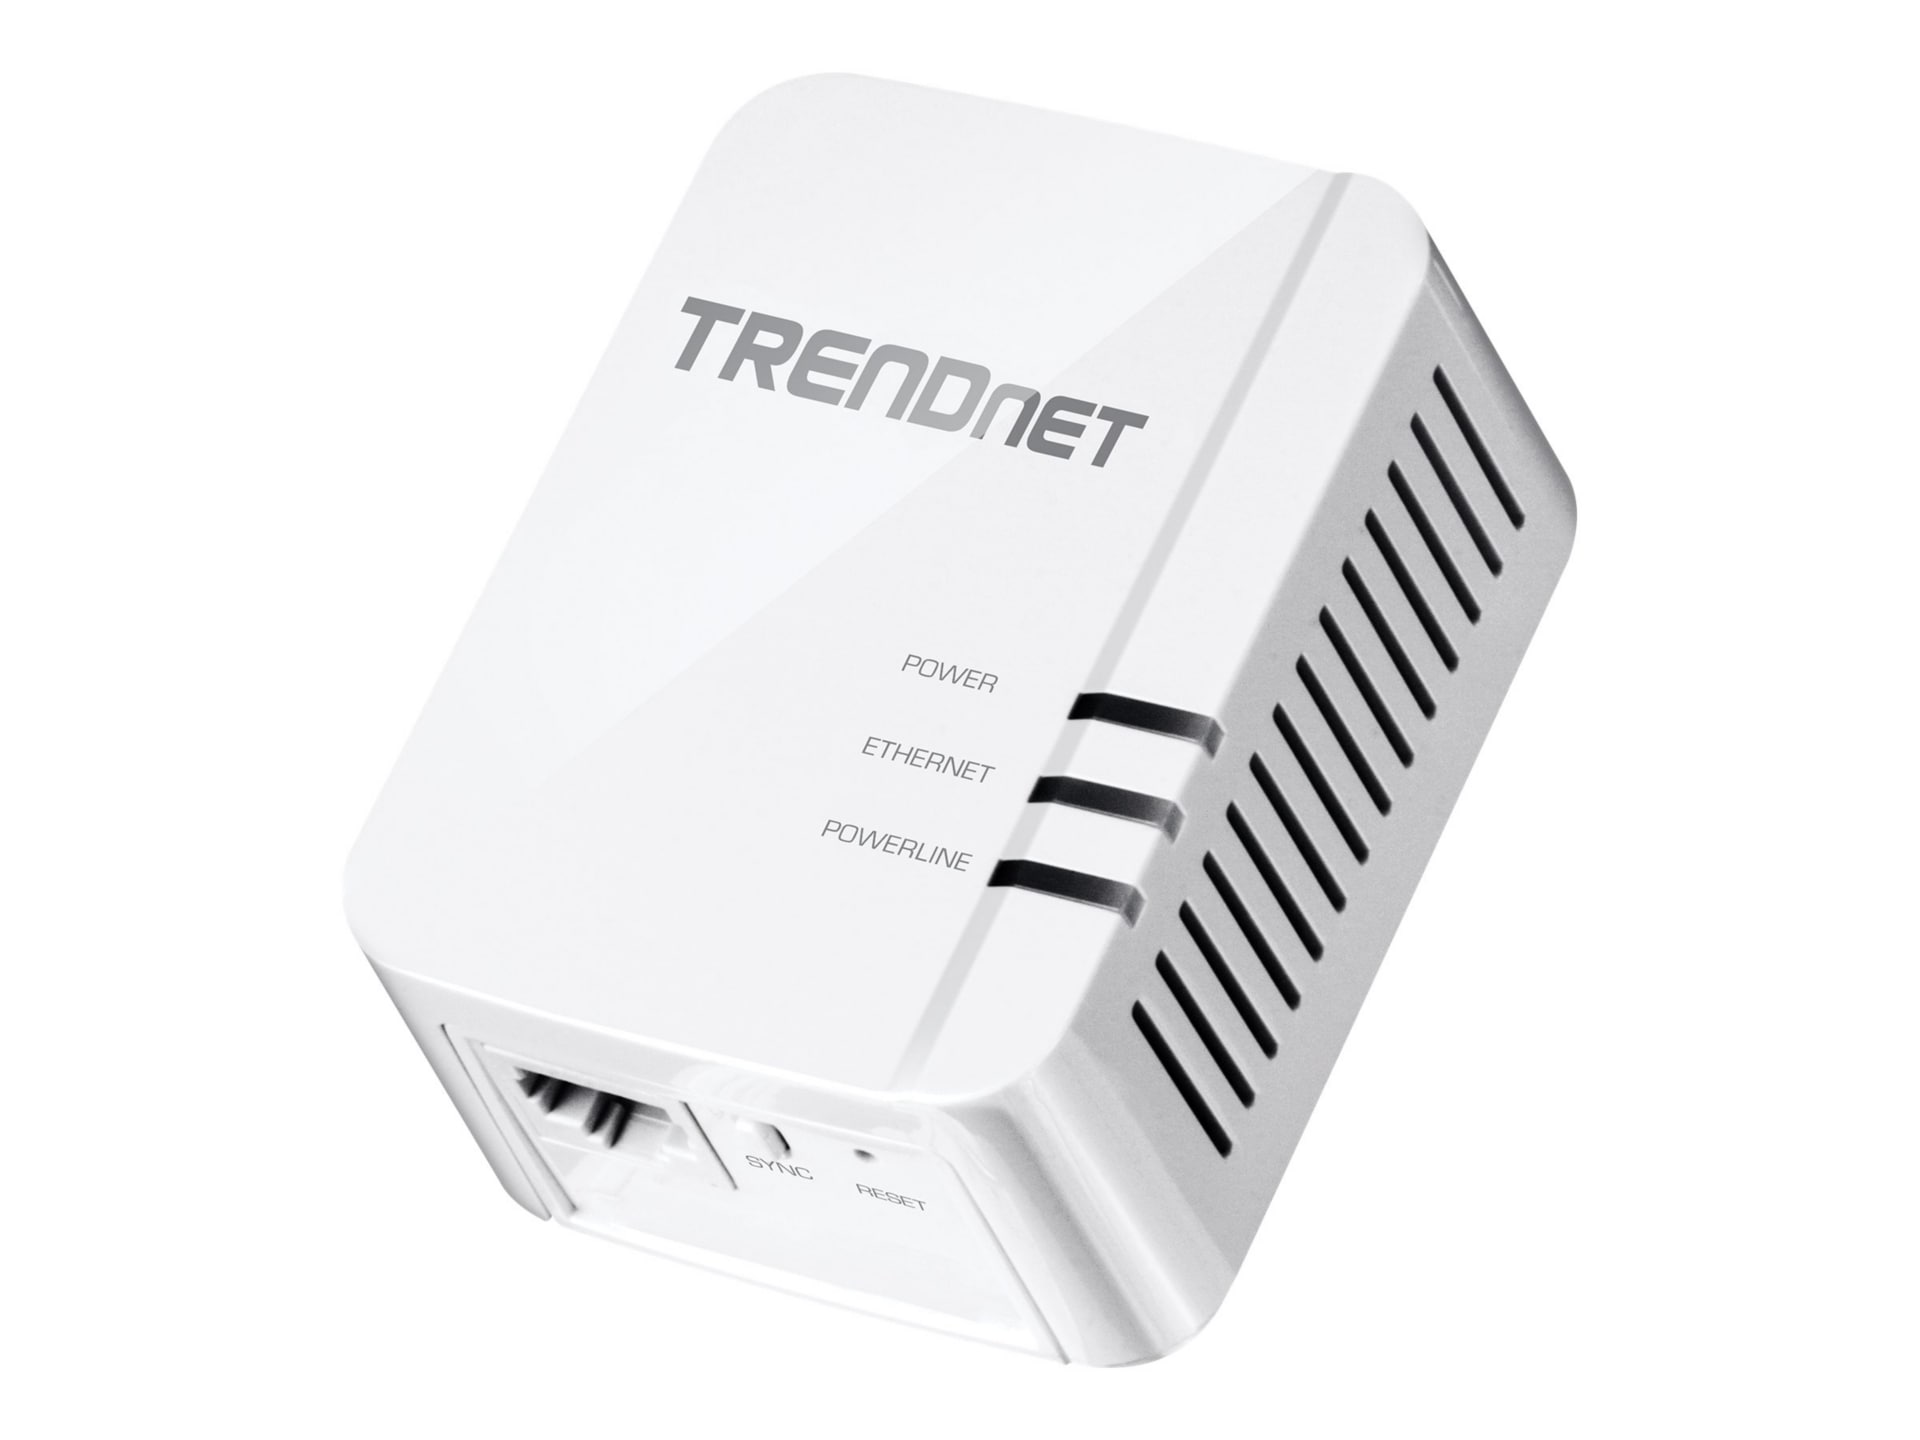 TRENDnet Powerline 1300 AV2 Adapter Kit, Includes 2 x TPL-422E Powerline Ethernet Adapters, IEEE 1905.1 & IEEE 1901,